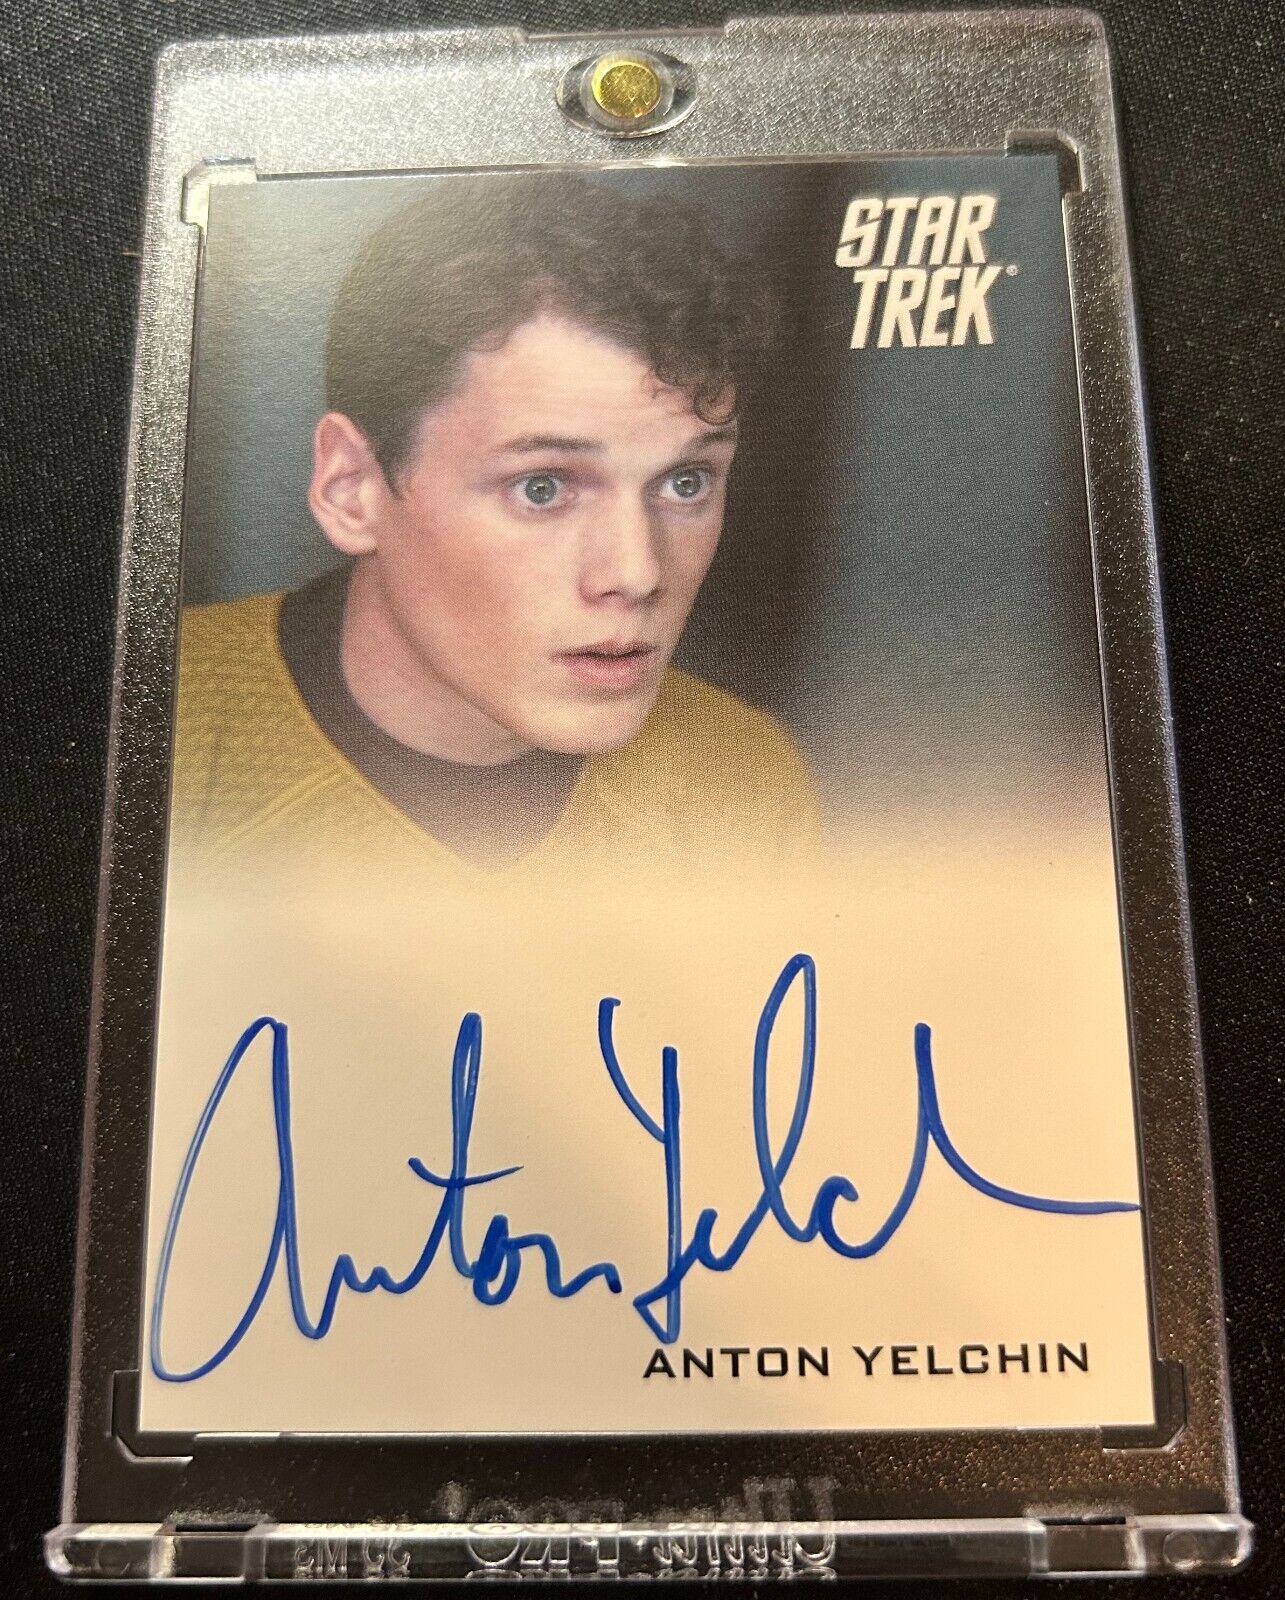 Anton Yelchin as Chekov 2009 Rittenhouse Star Trek Auto Autograph ON CARD d.2016